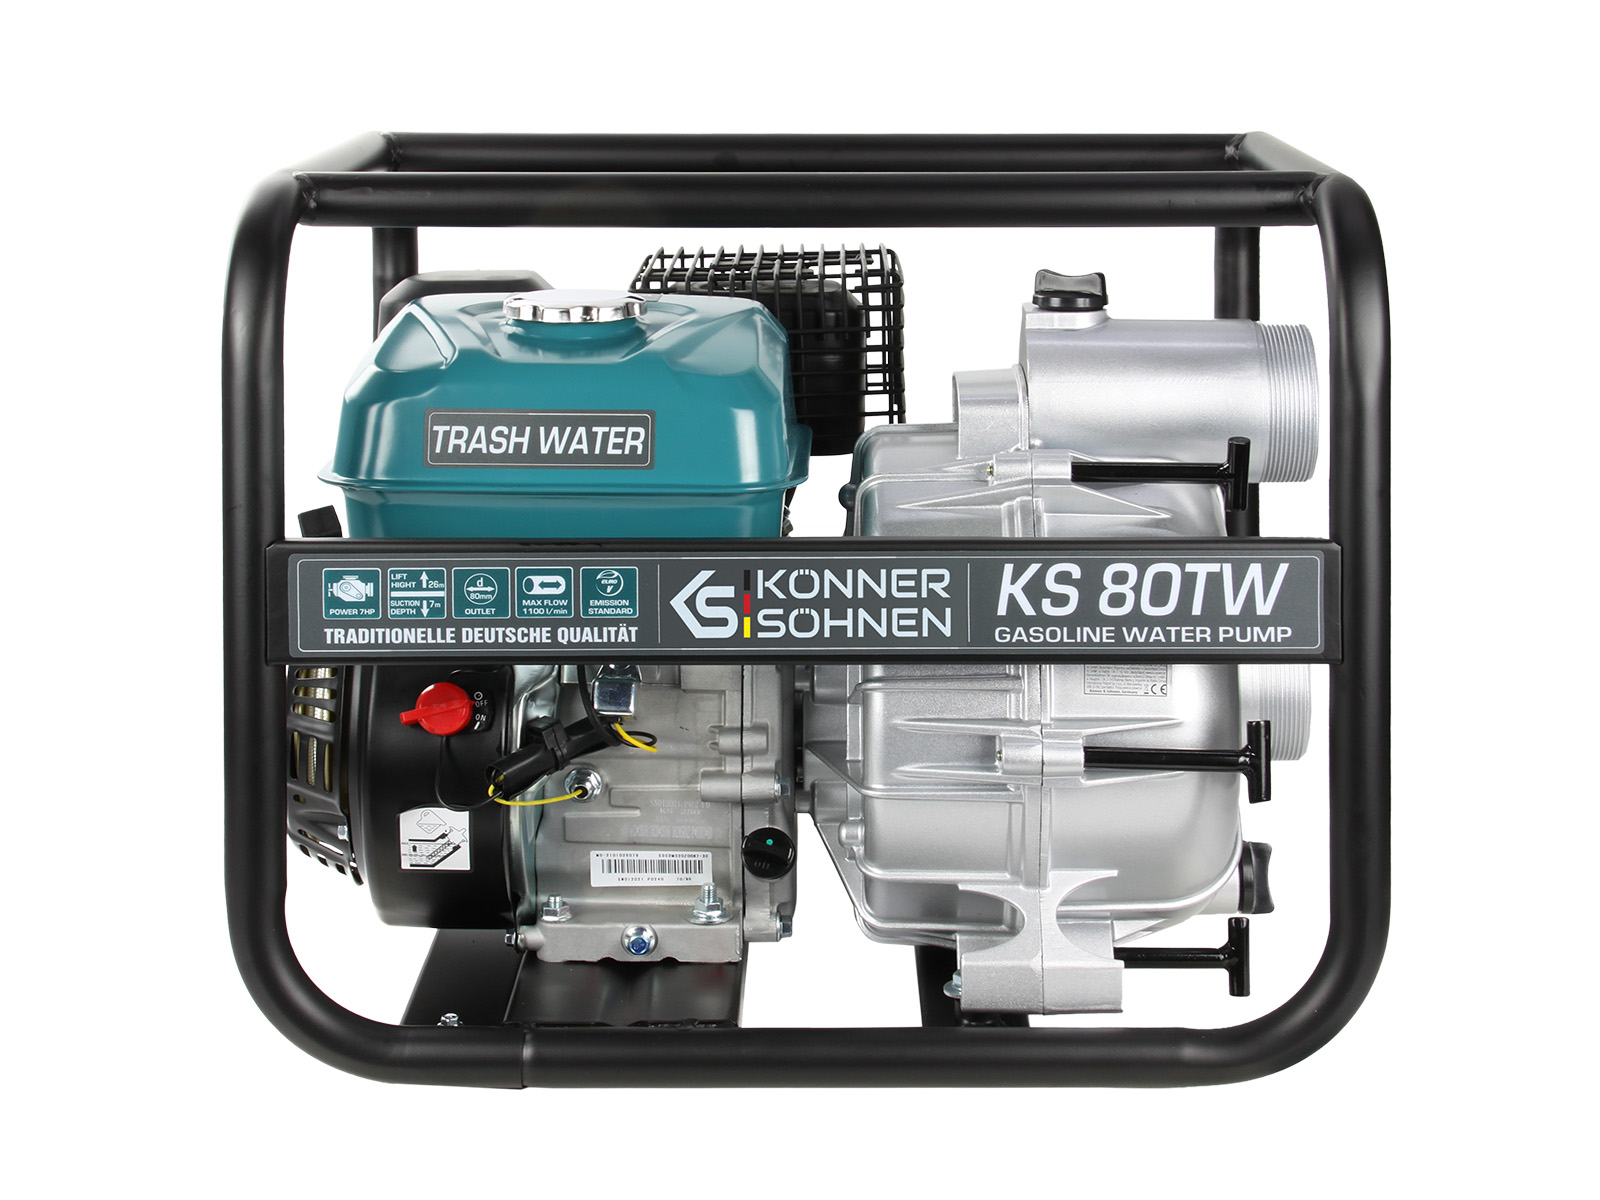 Motor pump for trash water KS 80TW